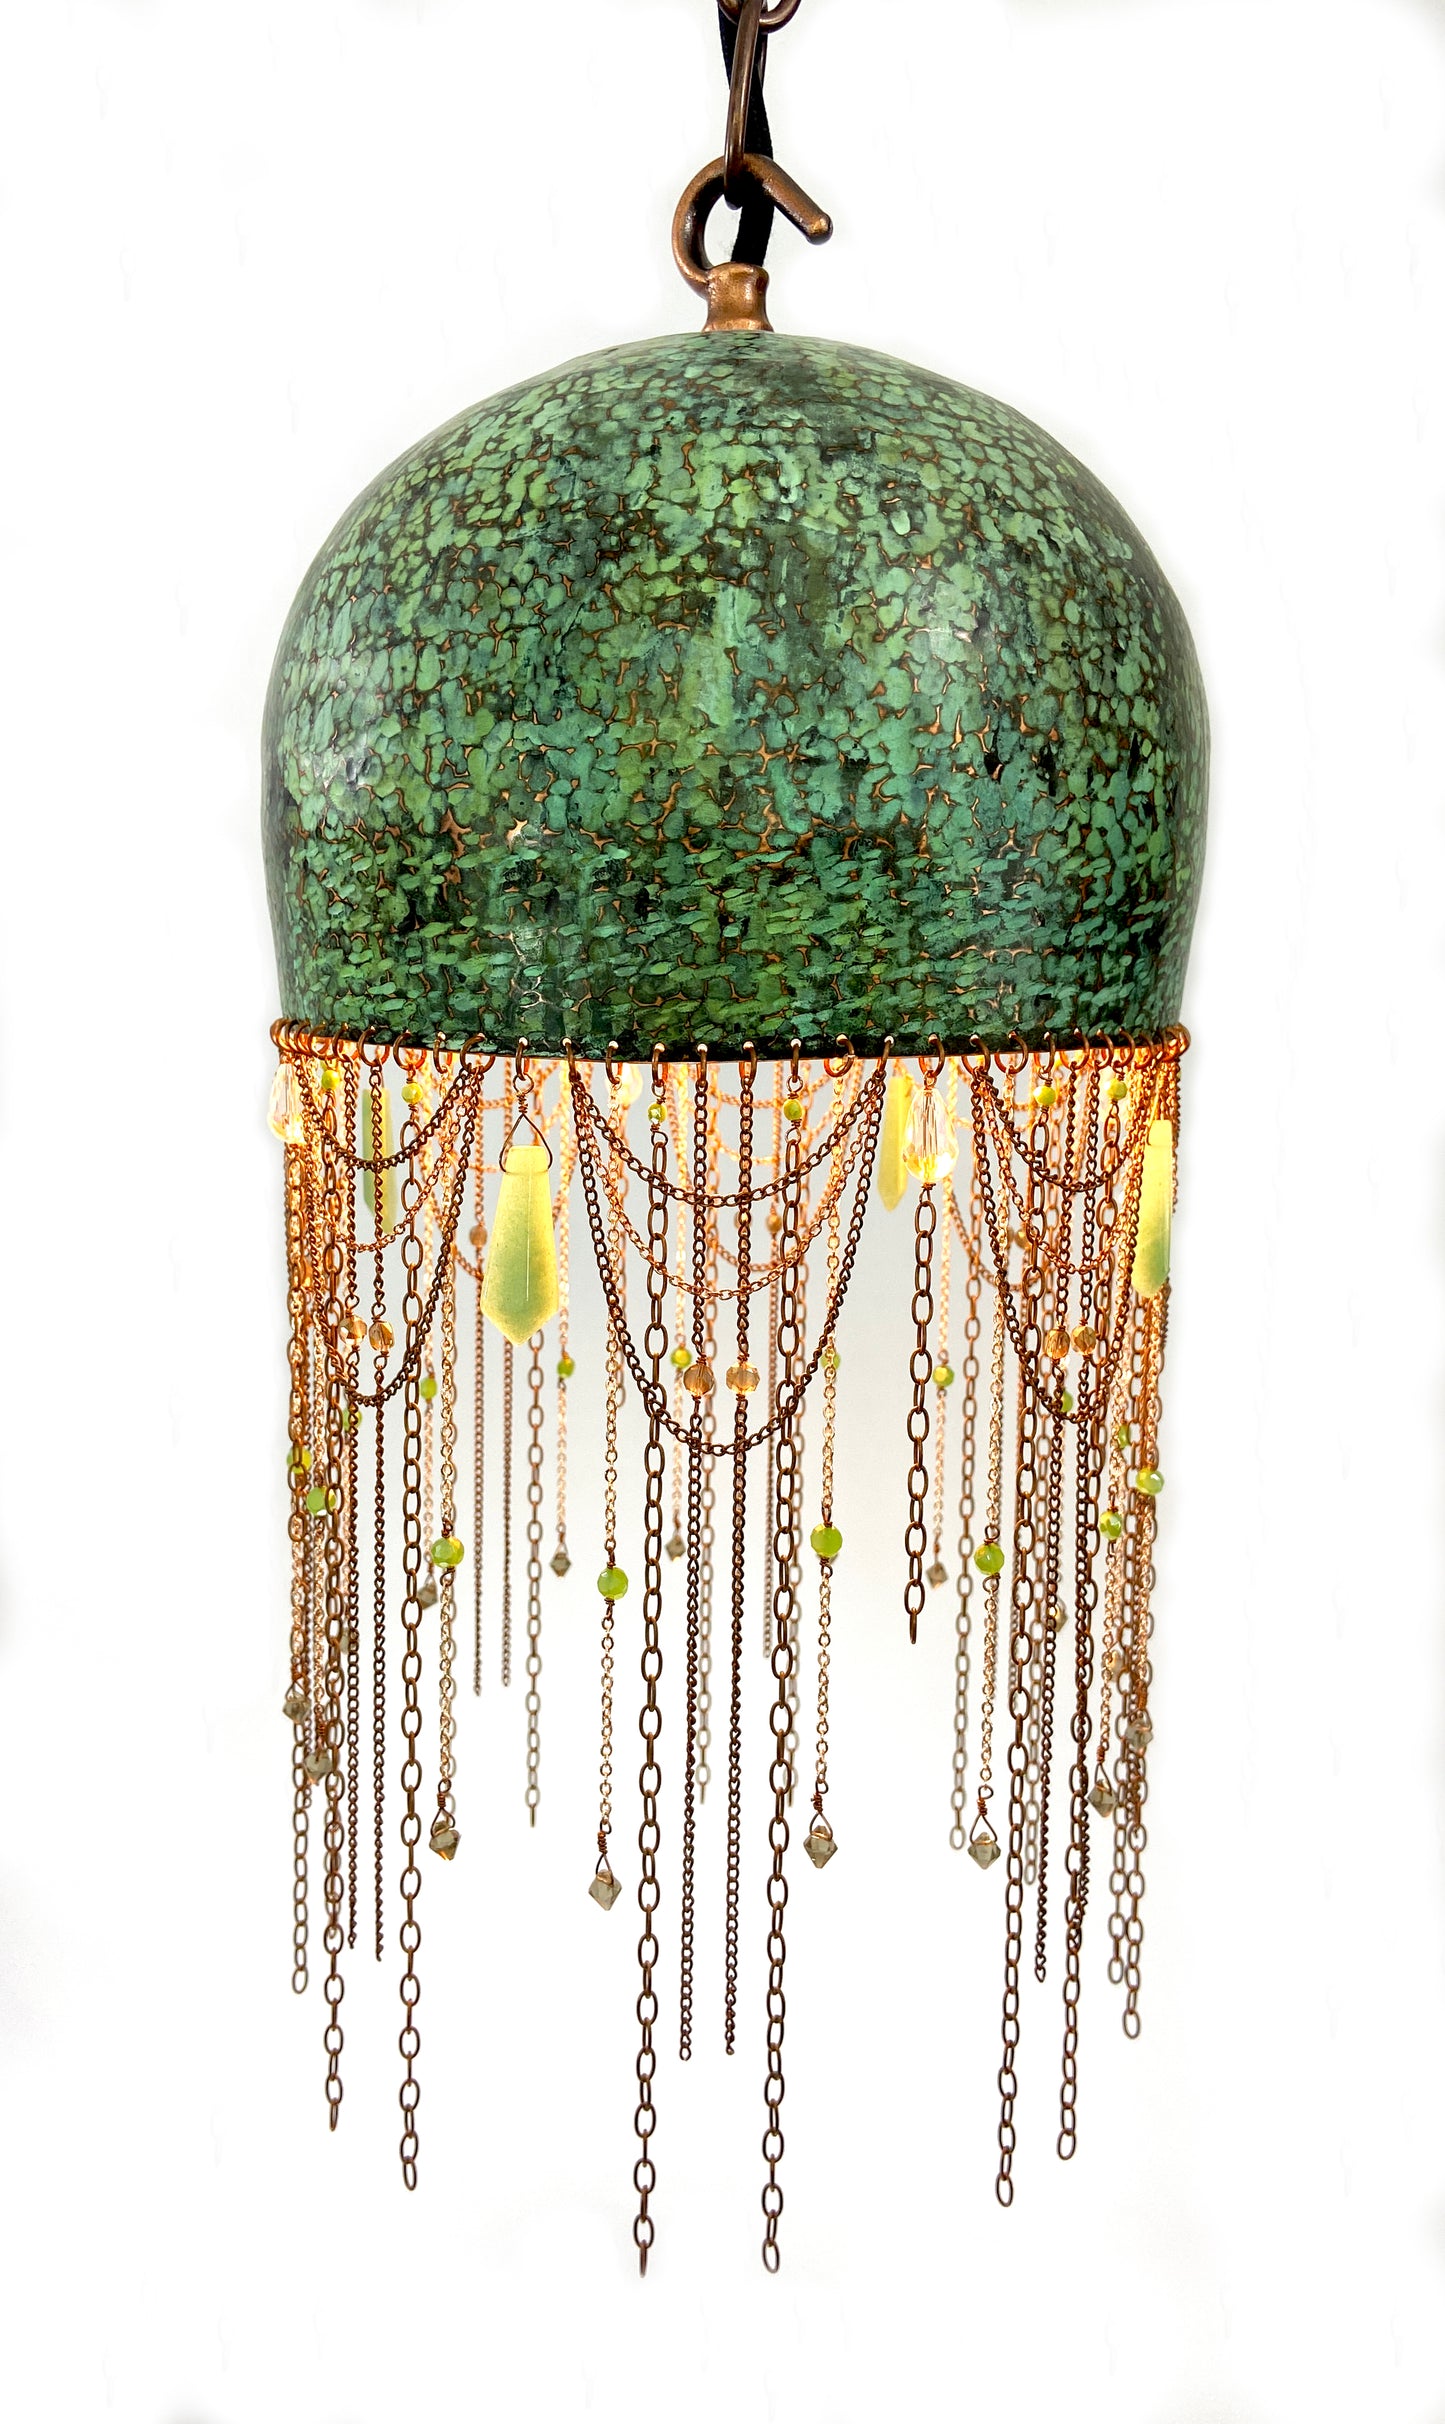 Green Pendant Lamp with Adventurine, Smokey Quartz and Crystal